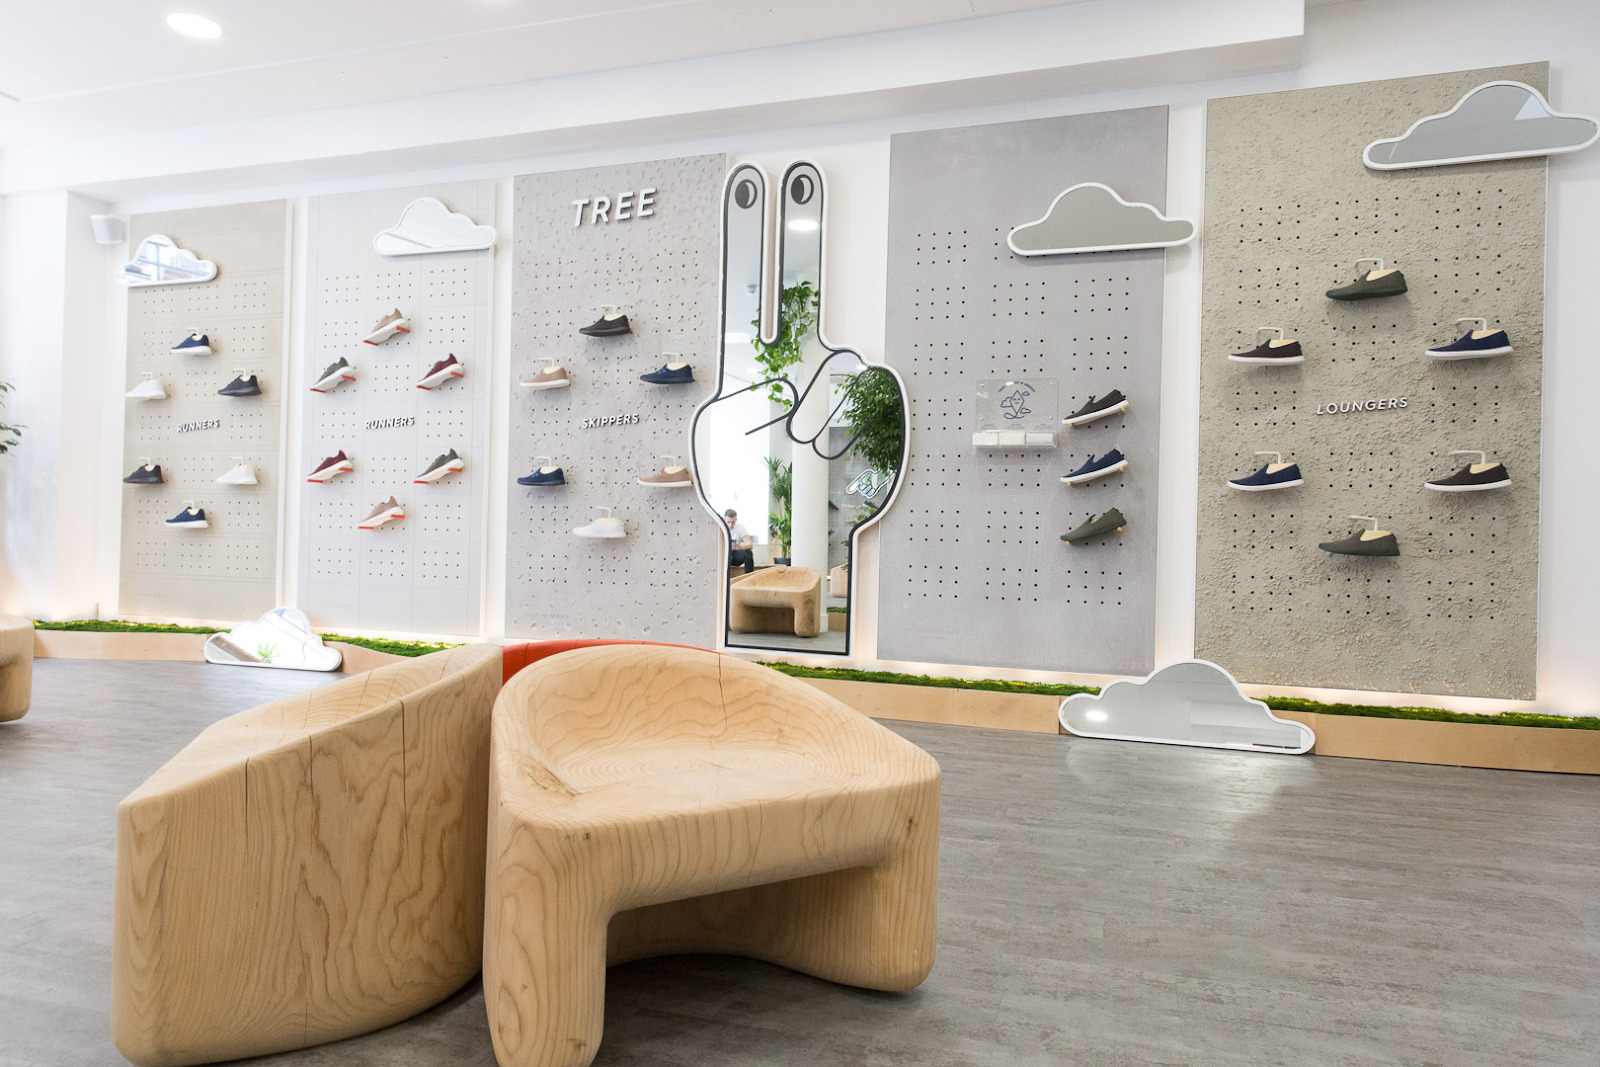 Allbirds visual merchandising display of shoes in retail store.